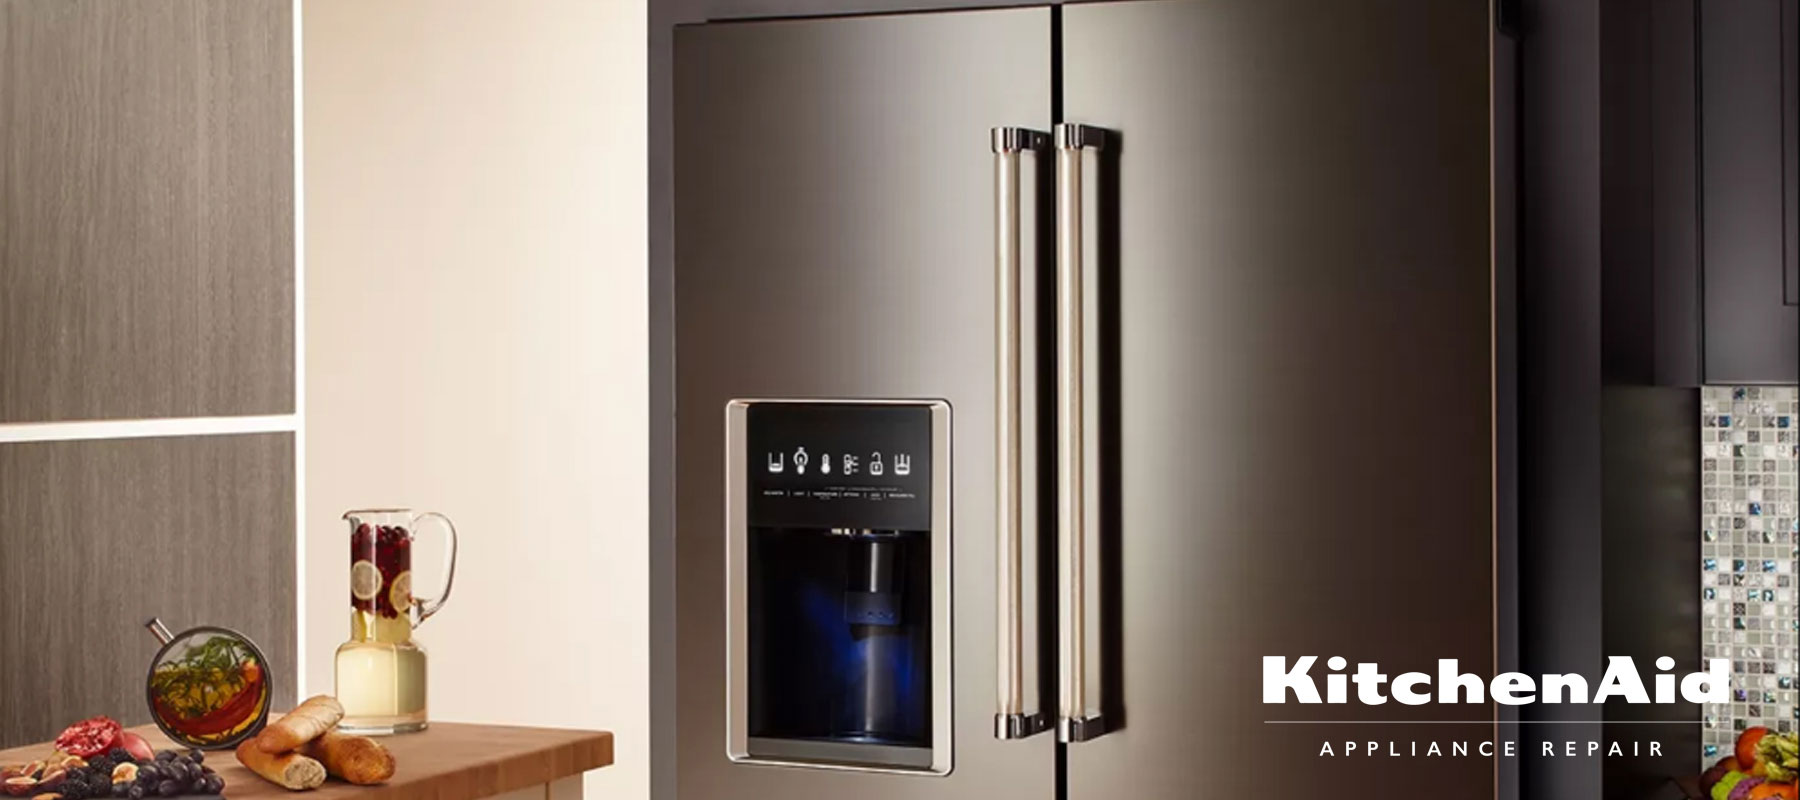 18+ Kitchenaid fridge making noise ideas in 2021 